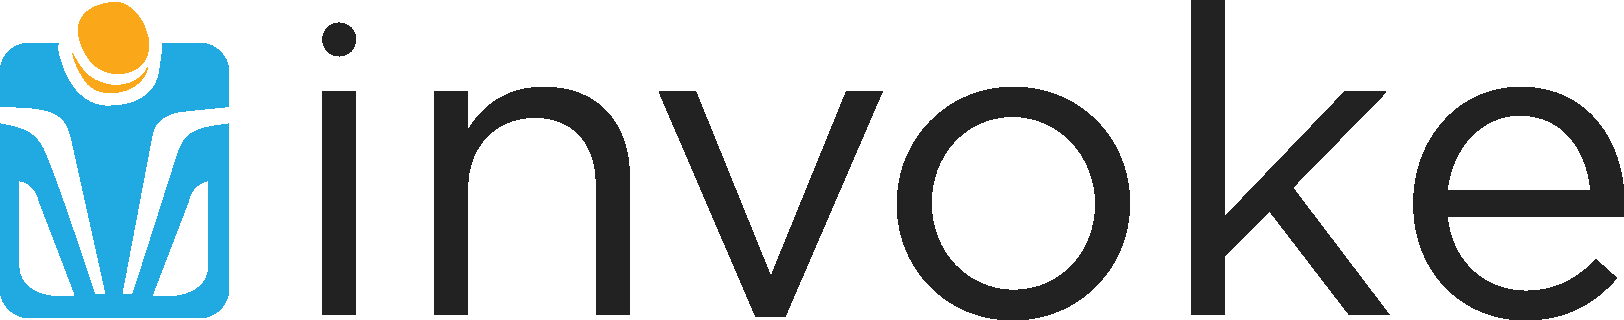 Invoke Logo.png